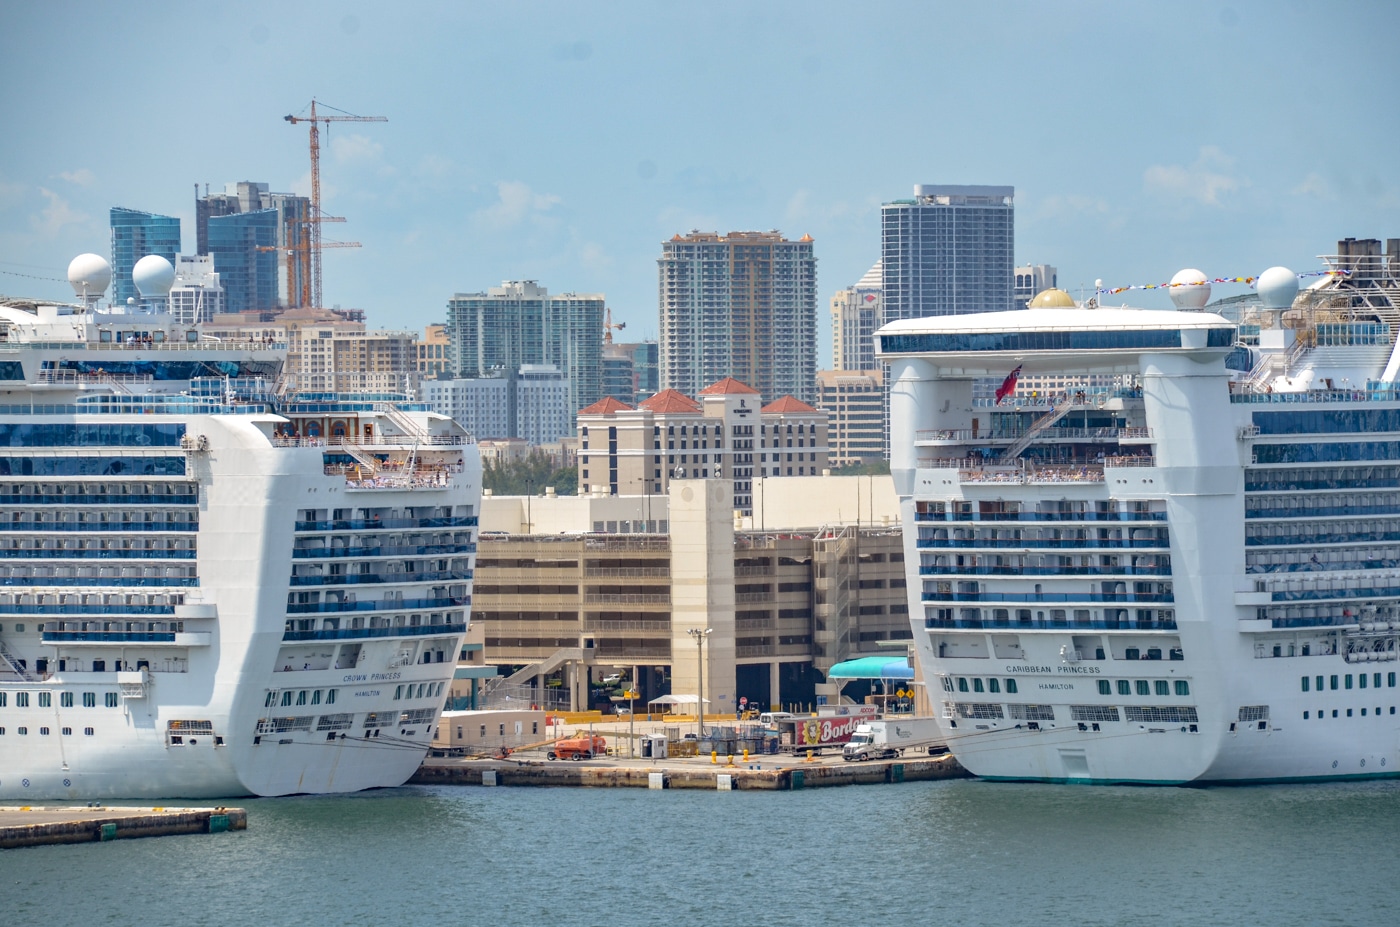 Princess cruise ships at Port Everglades